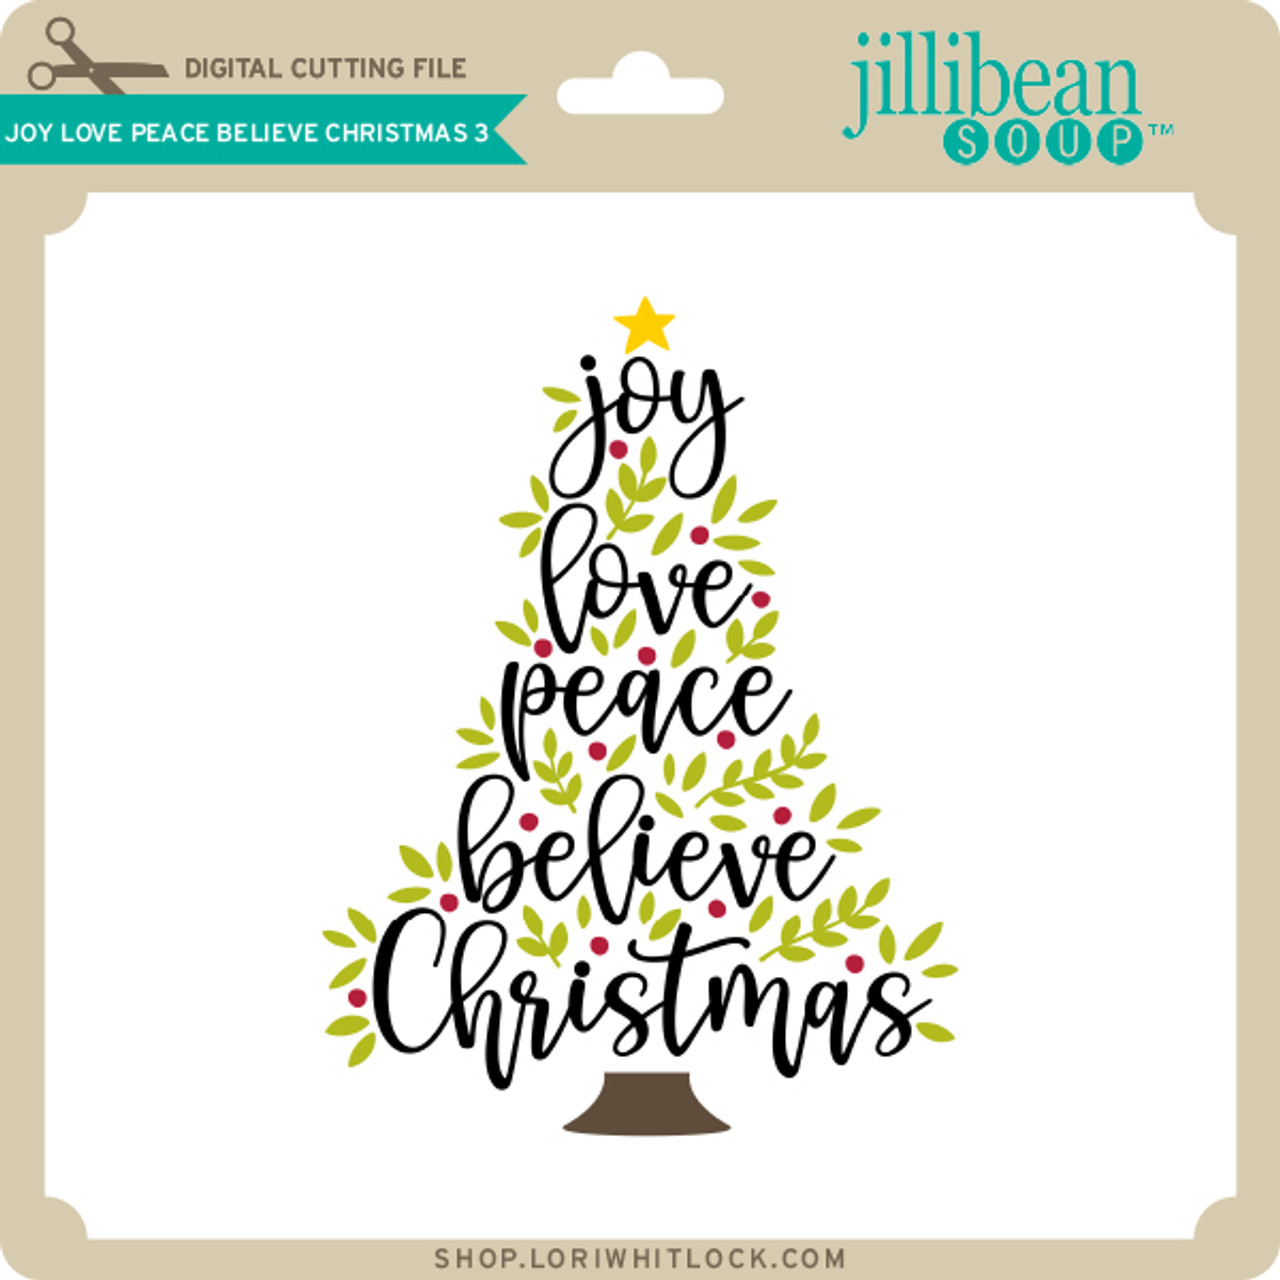 https://cdn11.bigcommerce.com/s-zlf3iiy2/images/stencil/1280x1280/products/17167/18982/JB-Joy-Love-Peace-Believe-Christmas-3__83913.1604368810.jpg?c=2